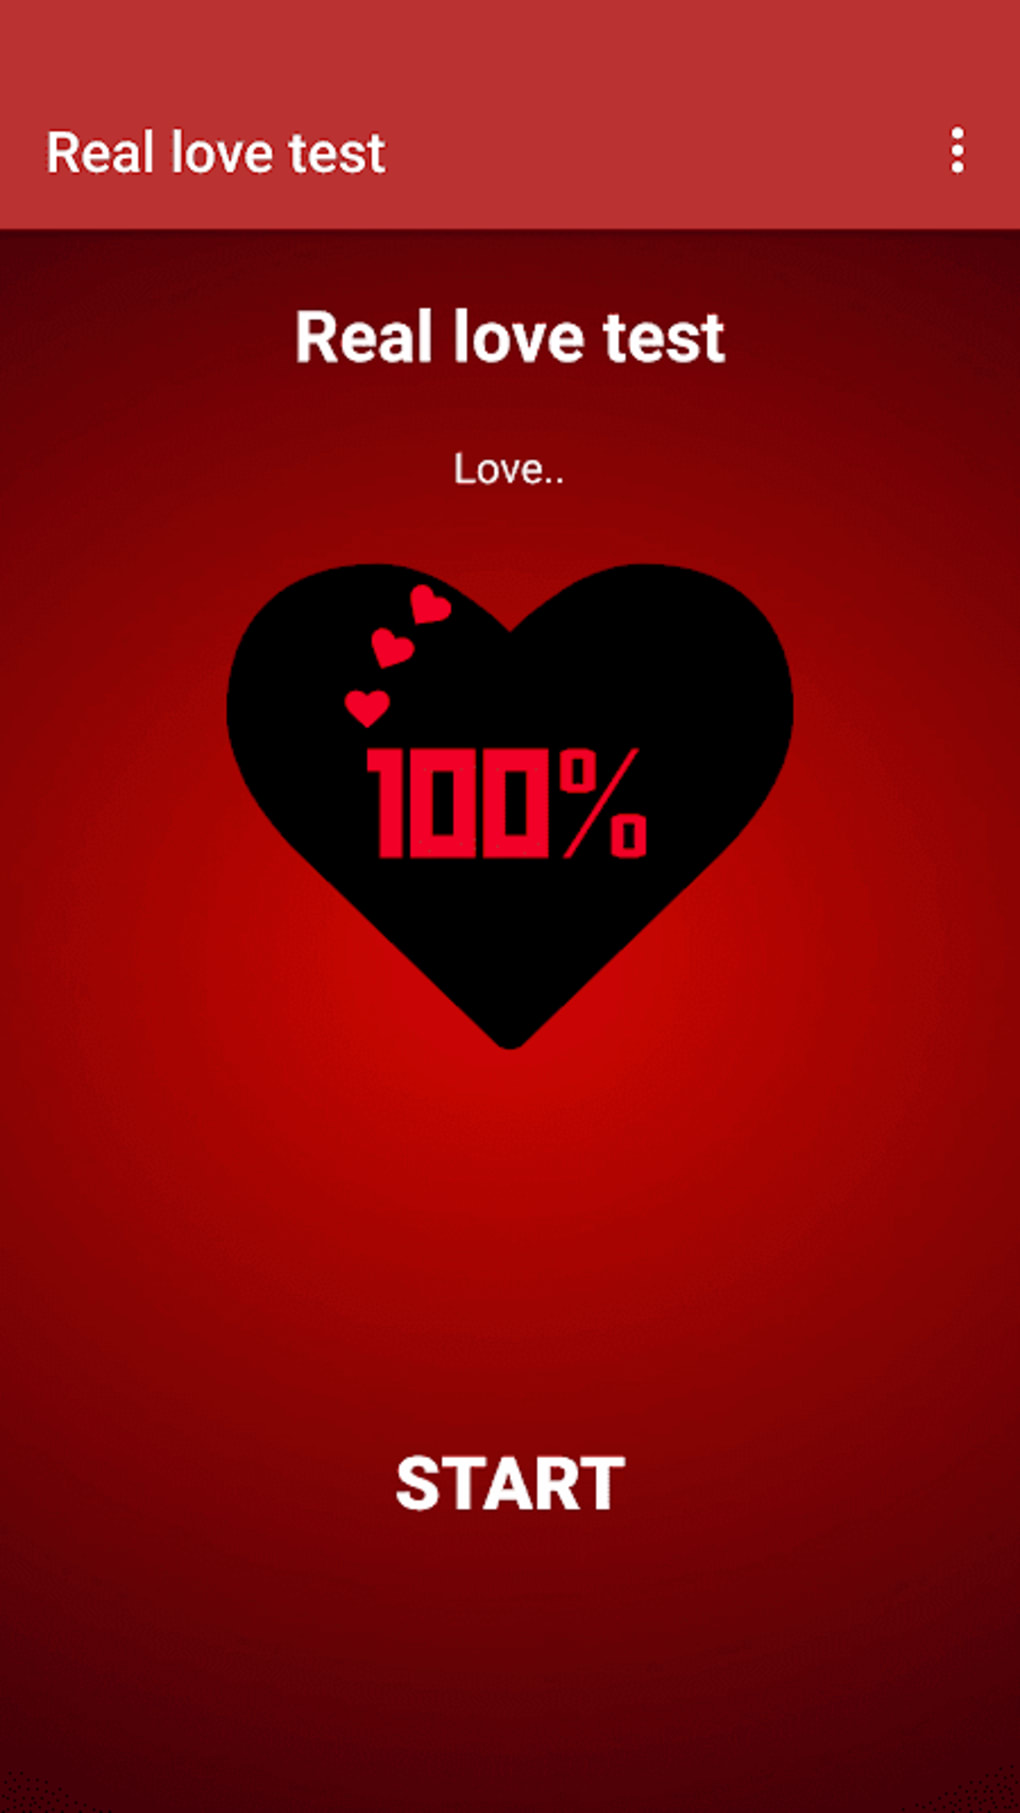 Love Test : Real Love Test Calculator